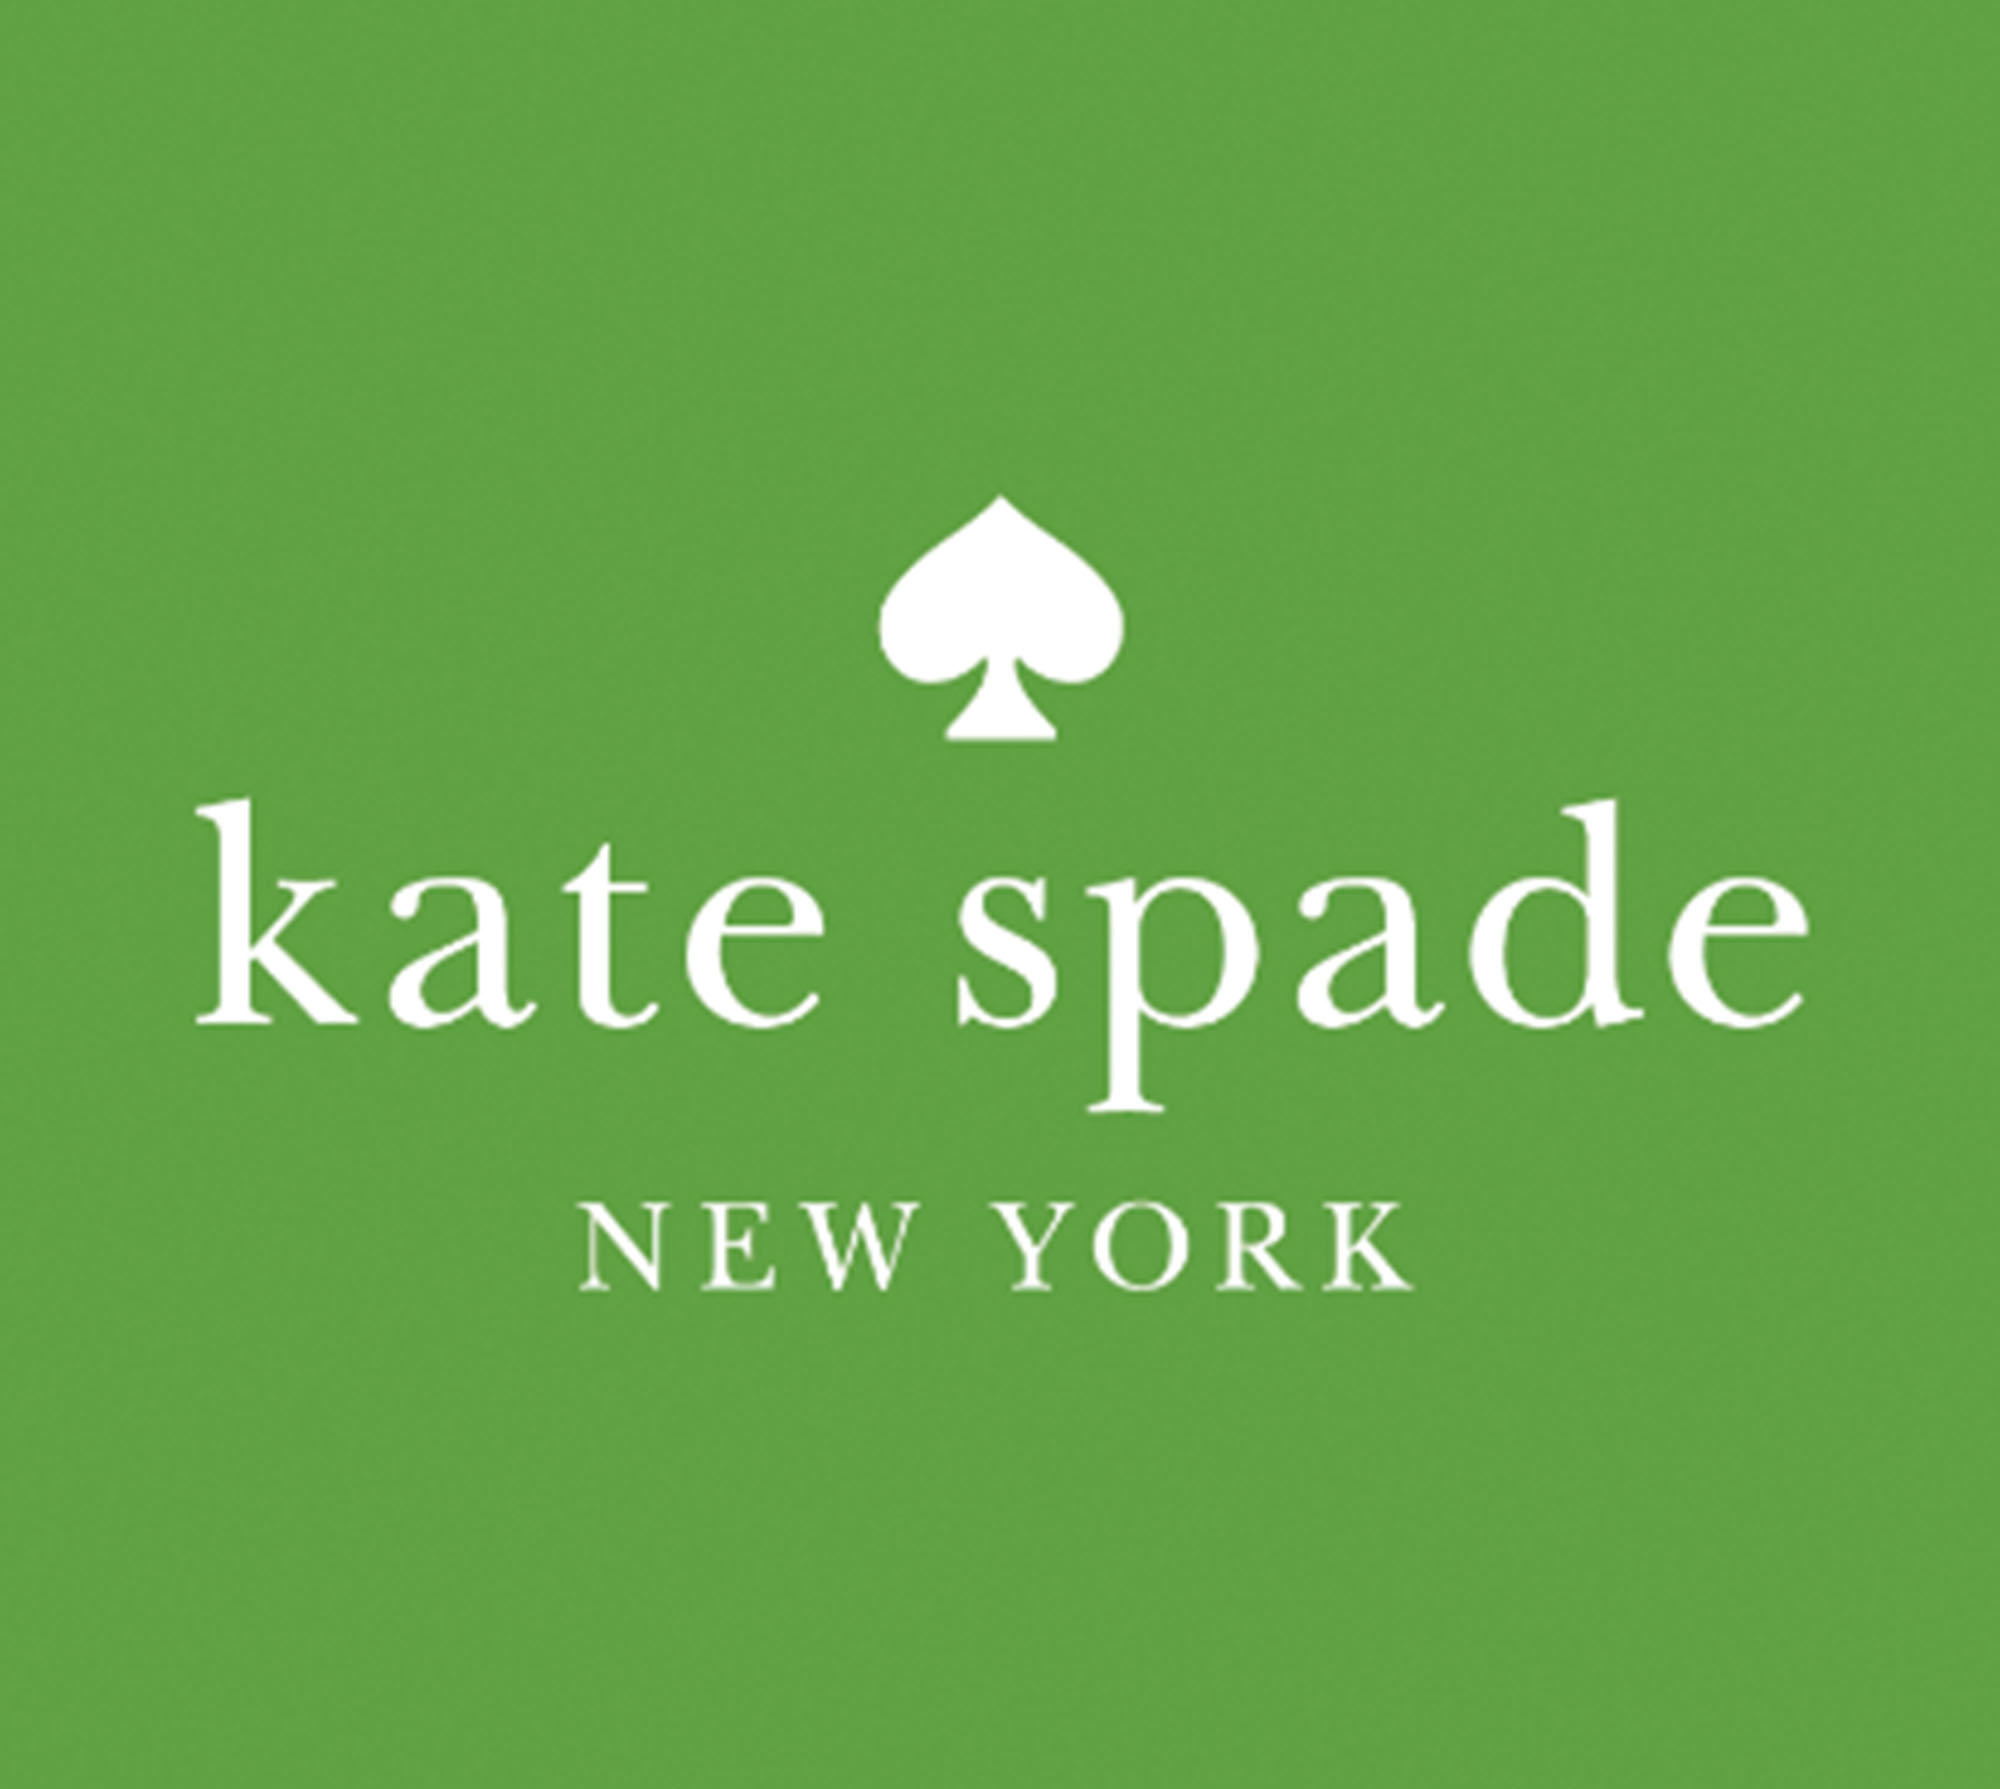 kate spade logo meaning - Quite Surprising E-Zine Photo Exhibition